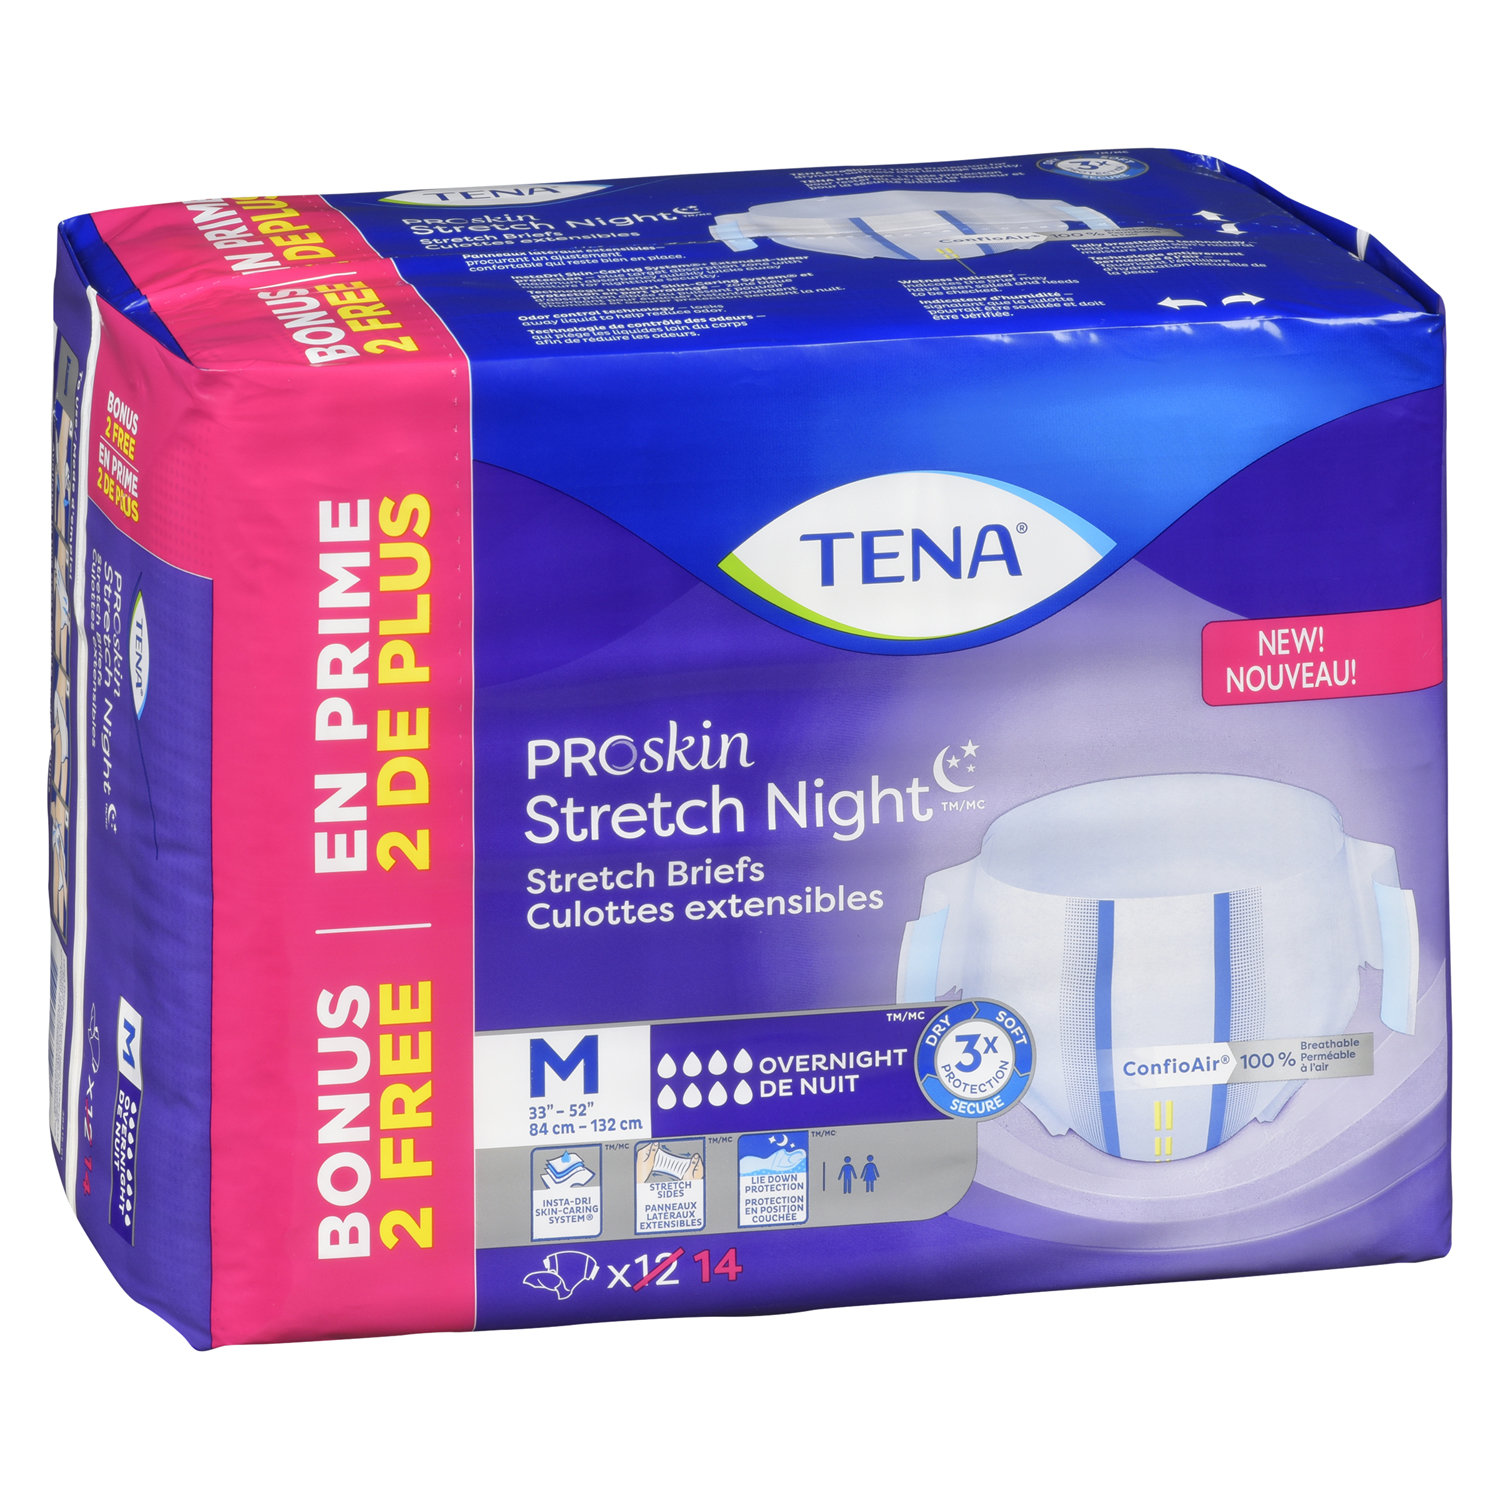 TENA ProSkin Stretch Night Briefs Overnight Absorbency M, 12 Ct